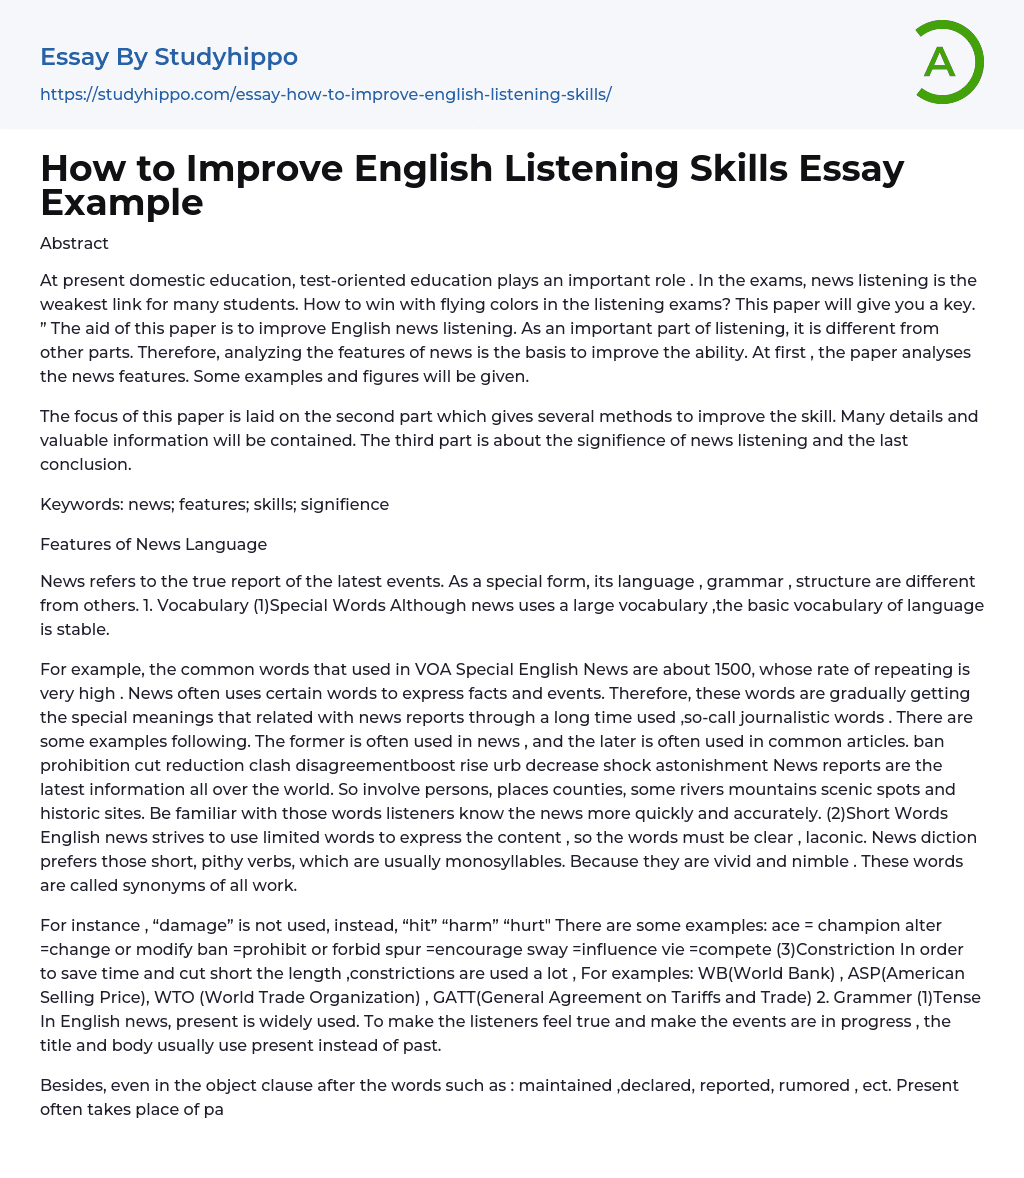 How to Improve English Listening Skills Essay Example